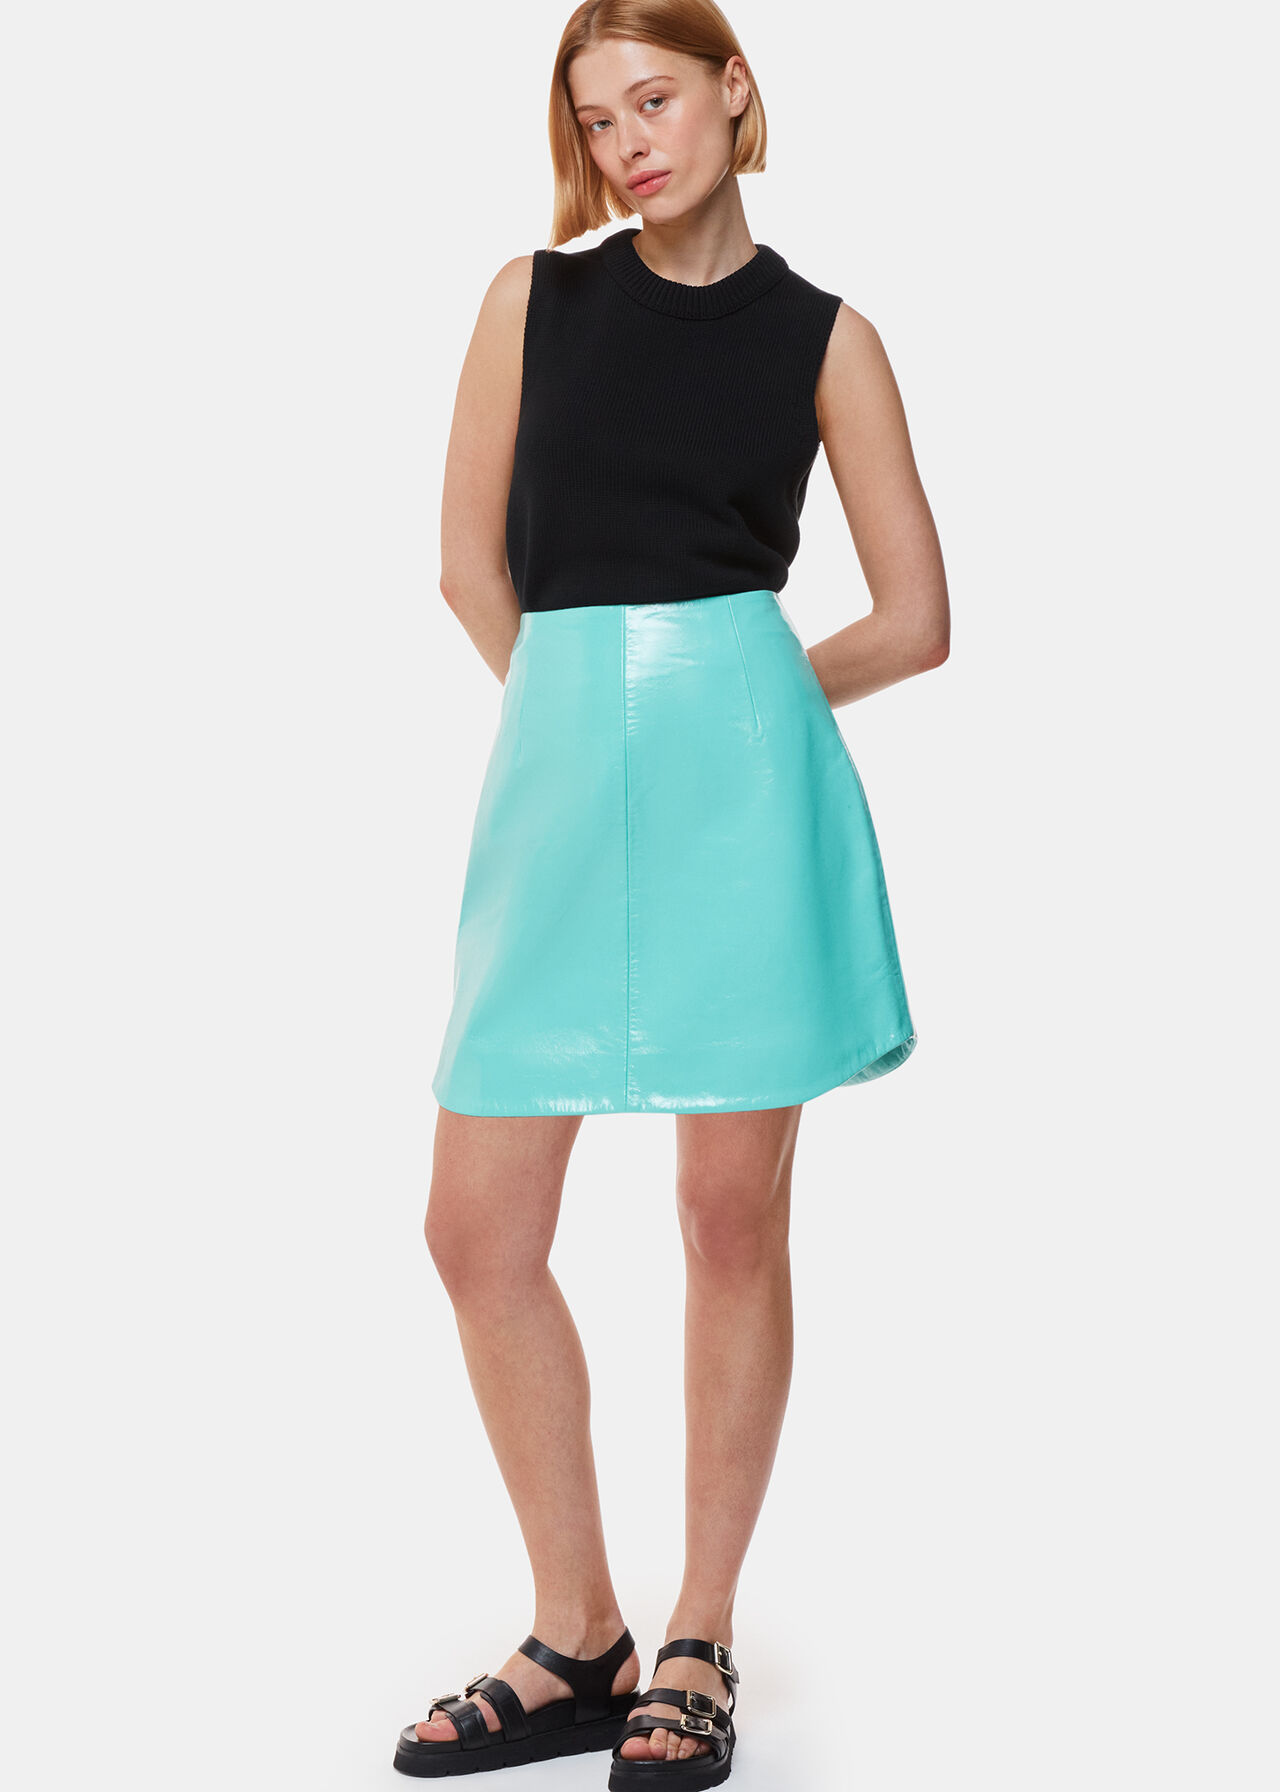 Patent Leather Mini Skirt